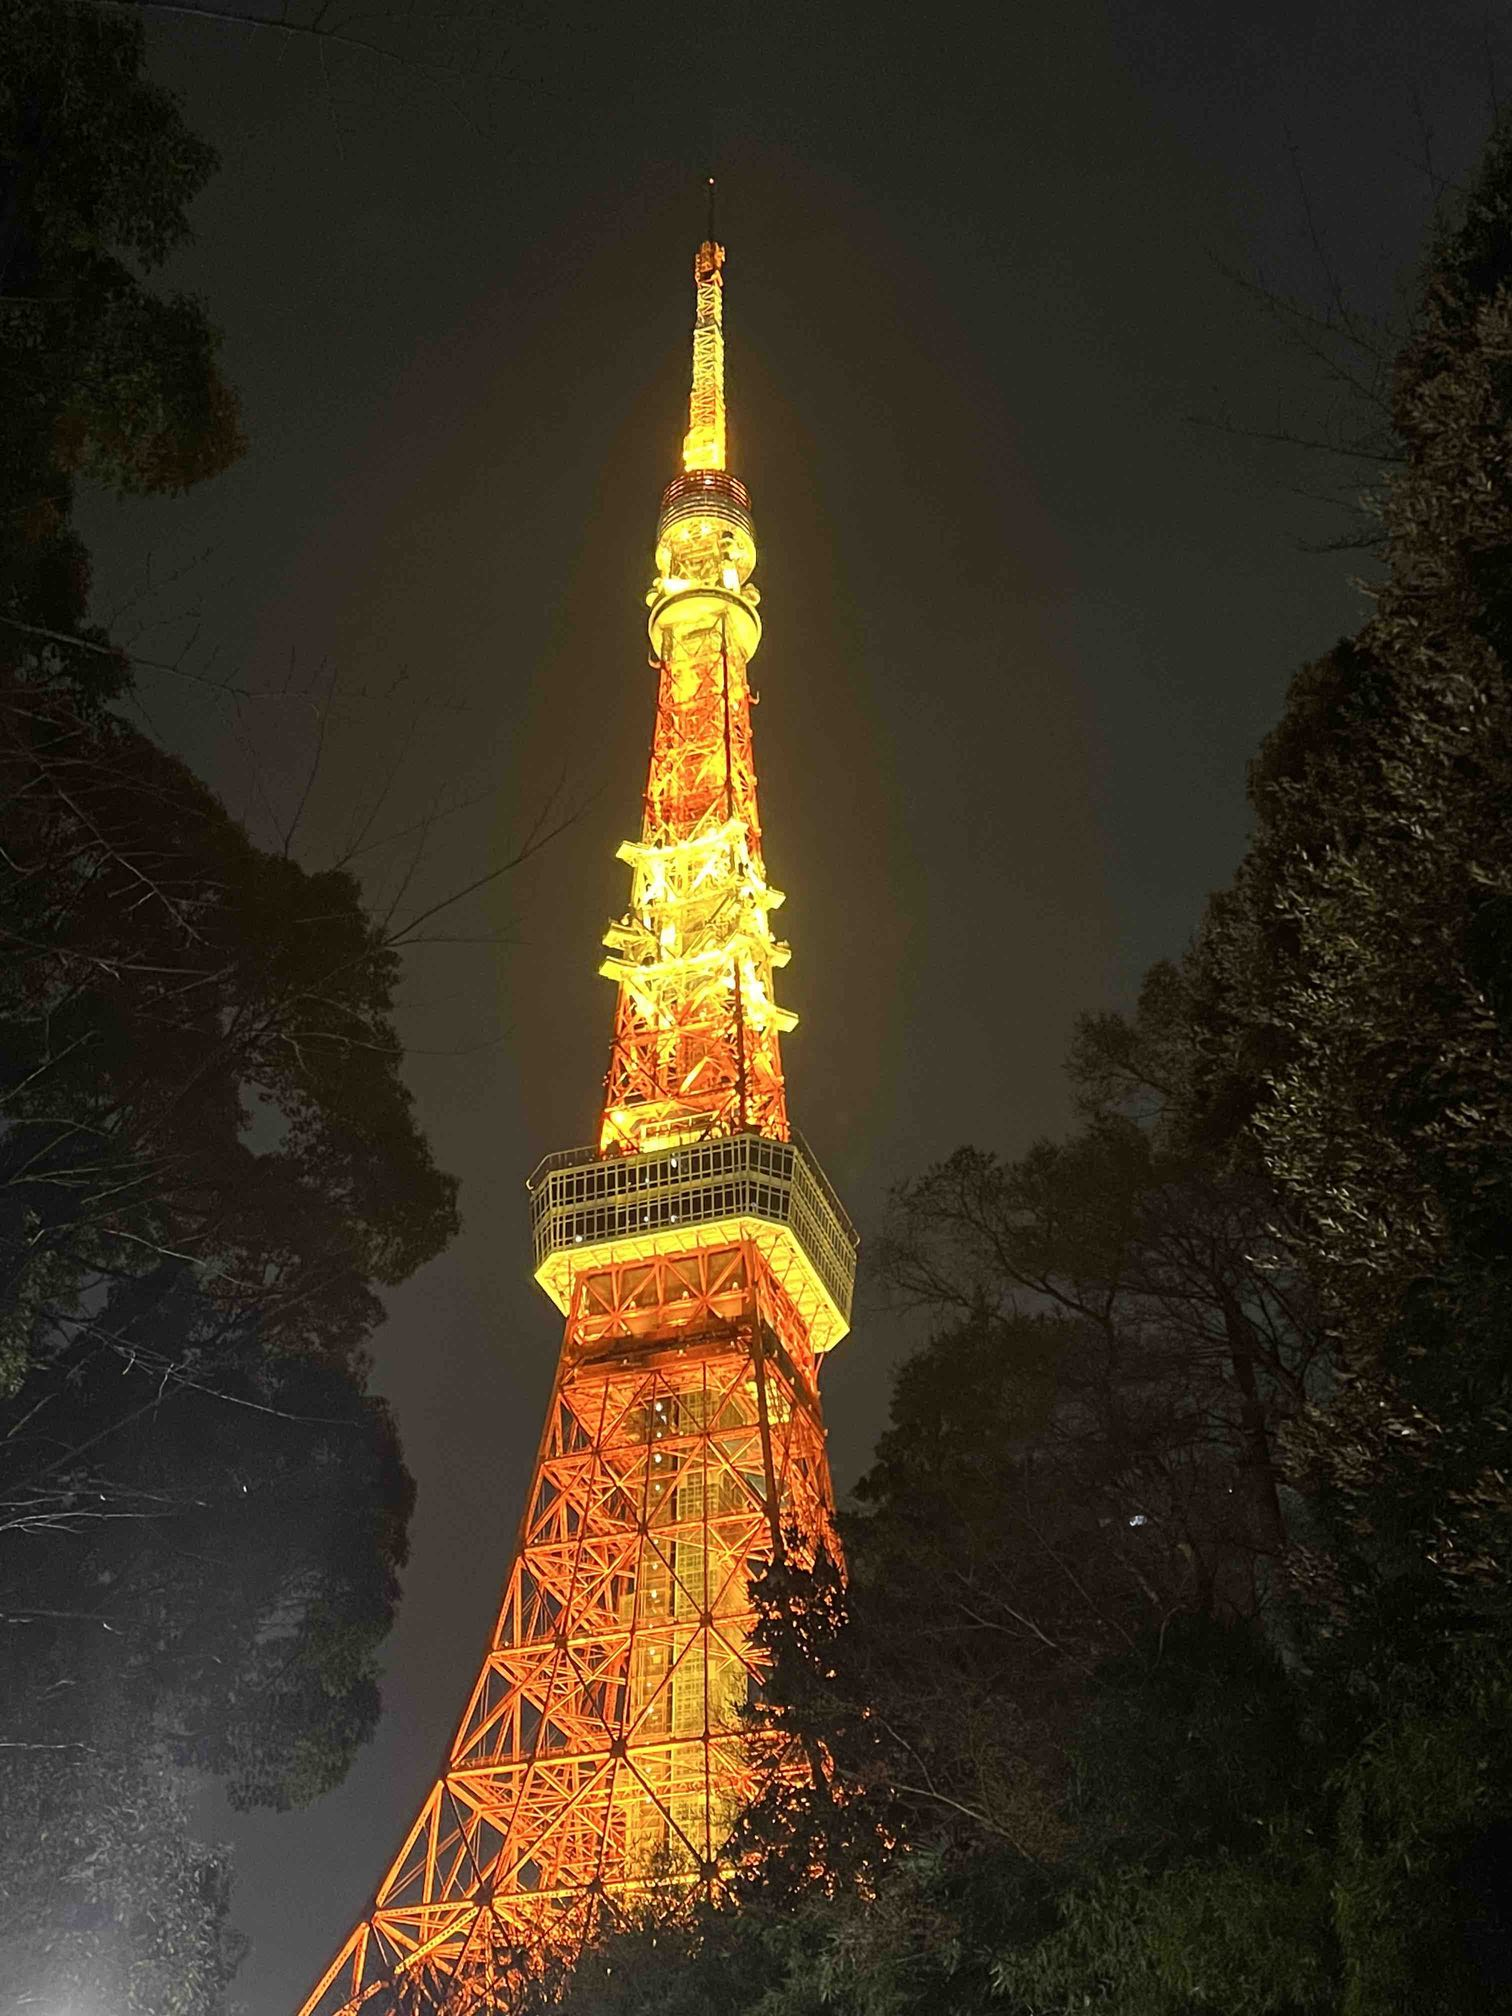 Tokyo Tower lit up at night